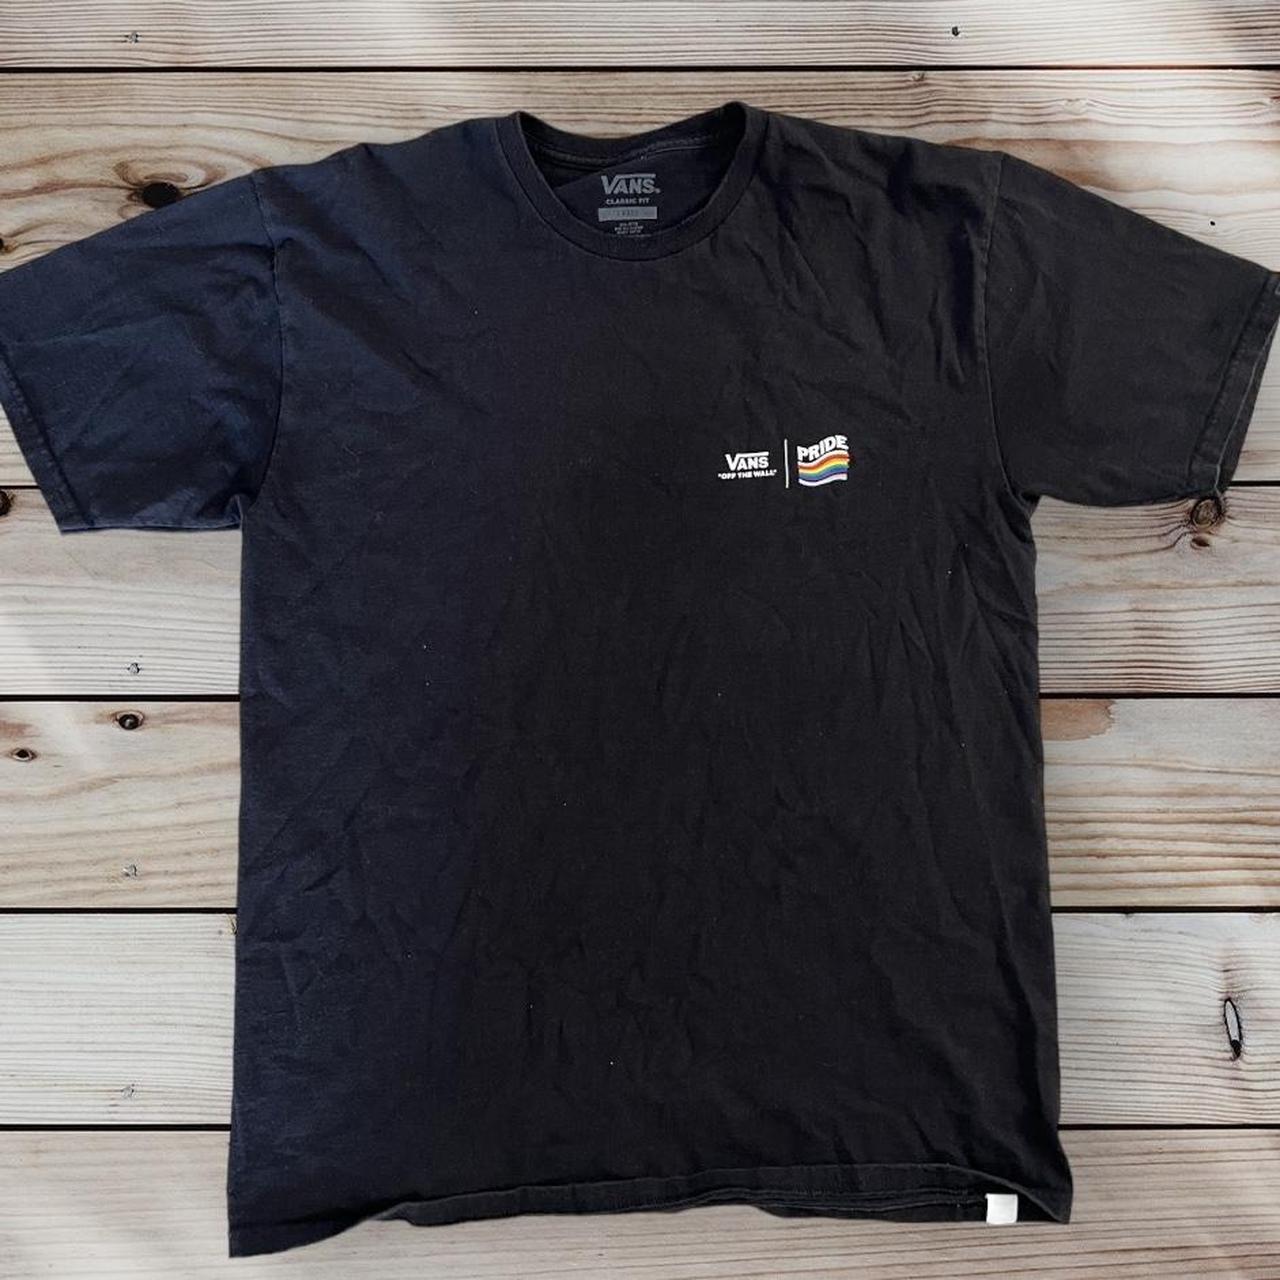 Vans Pride black t-shirt SIZE LARGE 19”W x... - Depop